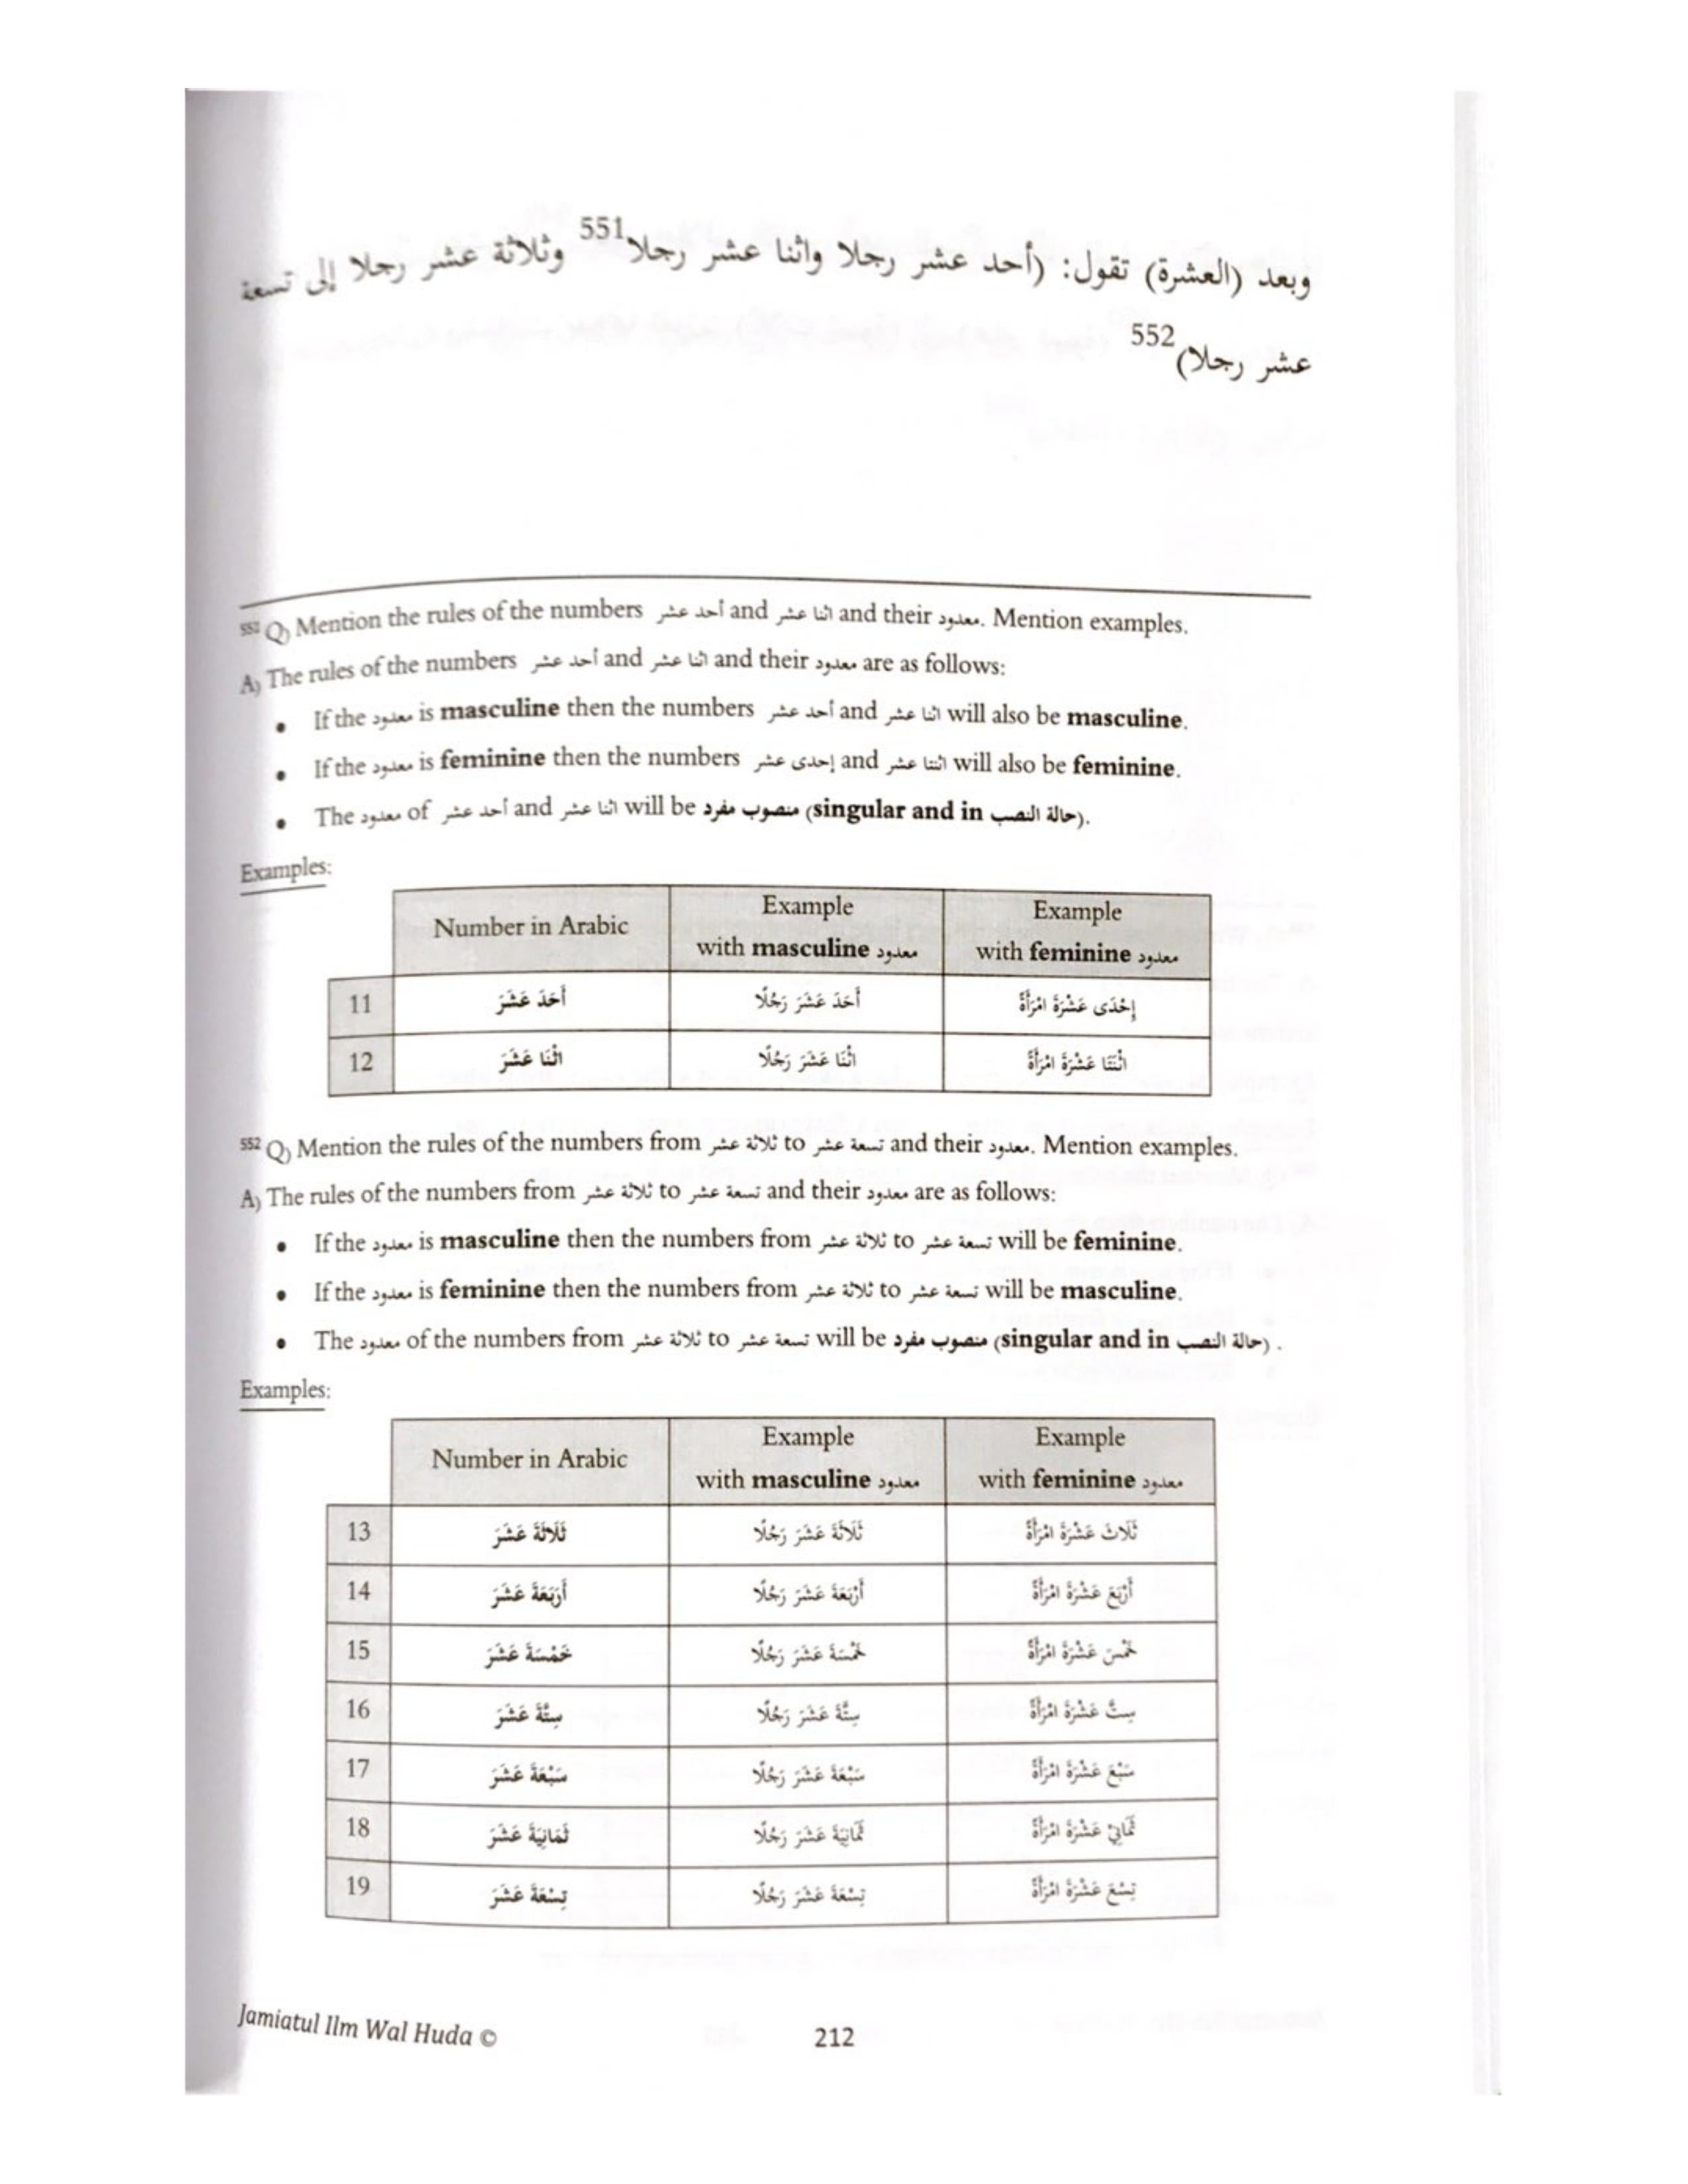 Hidayat al-Nahw With English Notes & Q&A - aljareer online